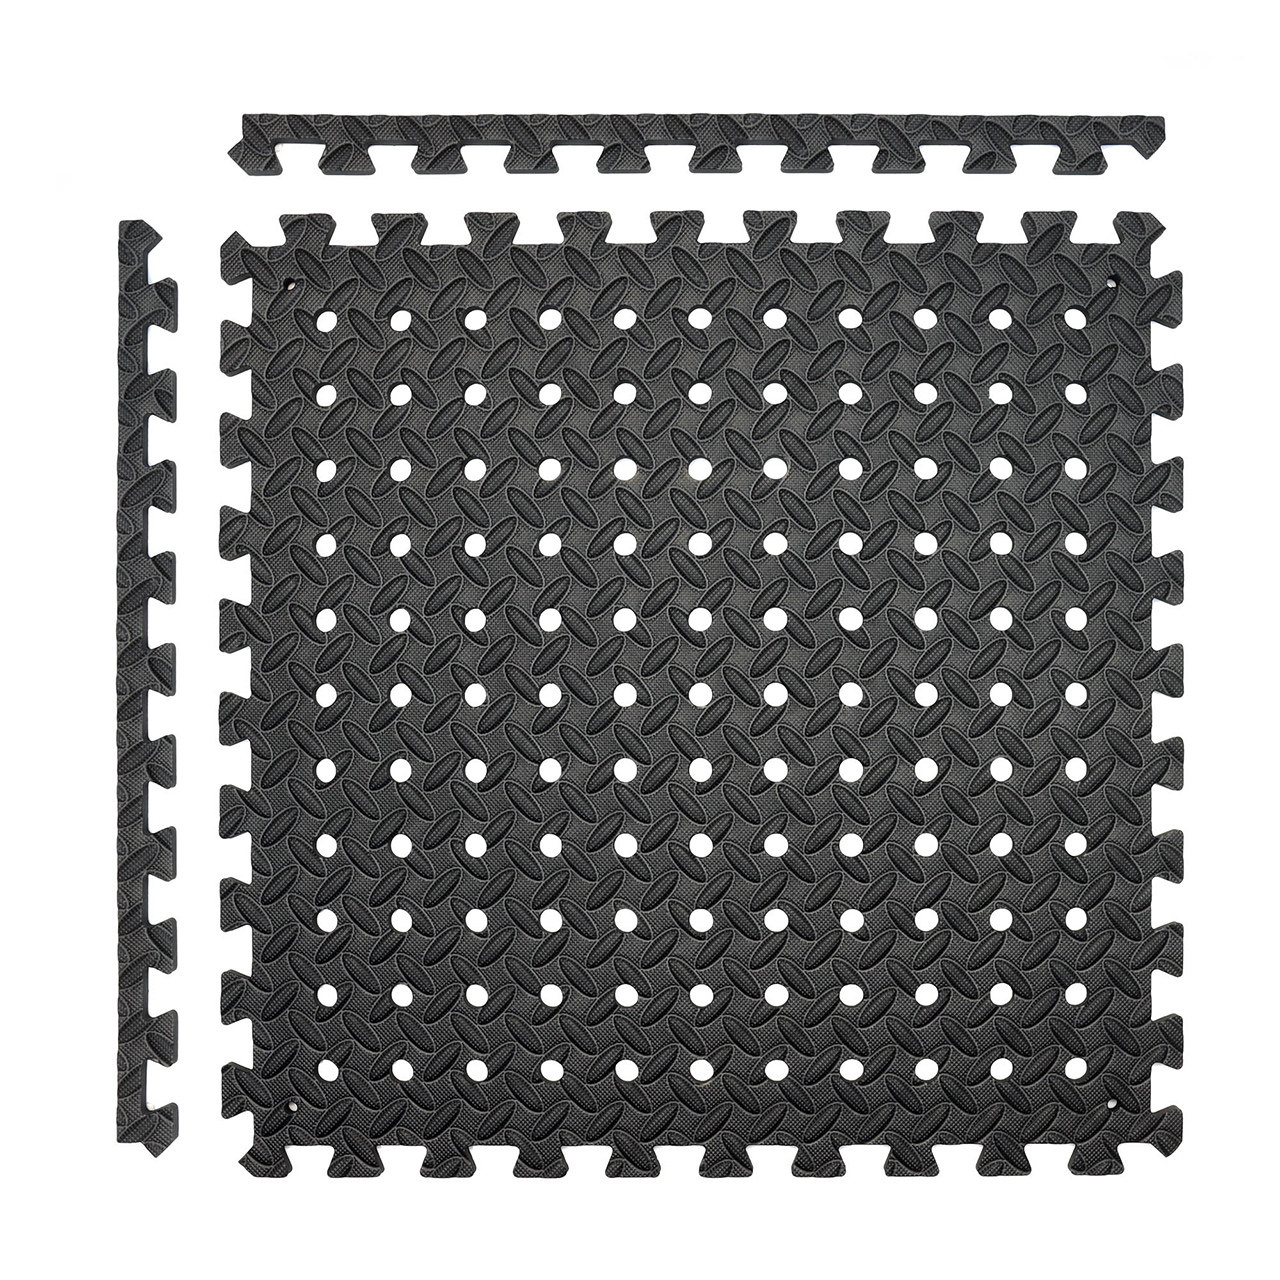 Interlocking Modular Floor Tiles Kit